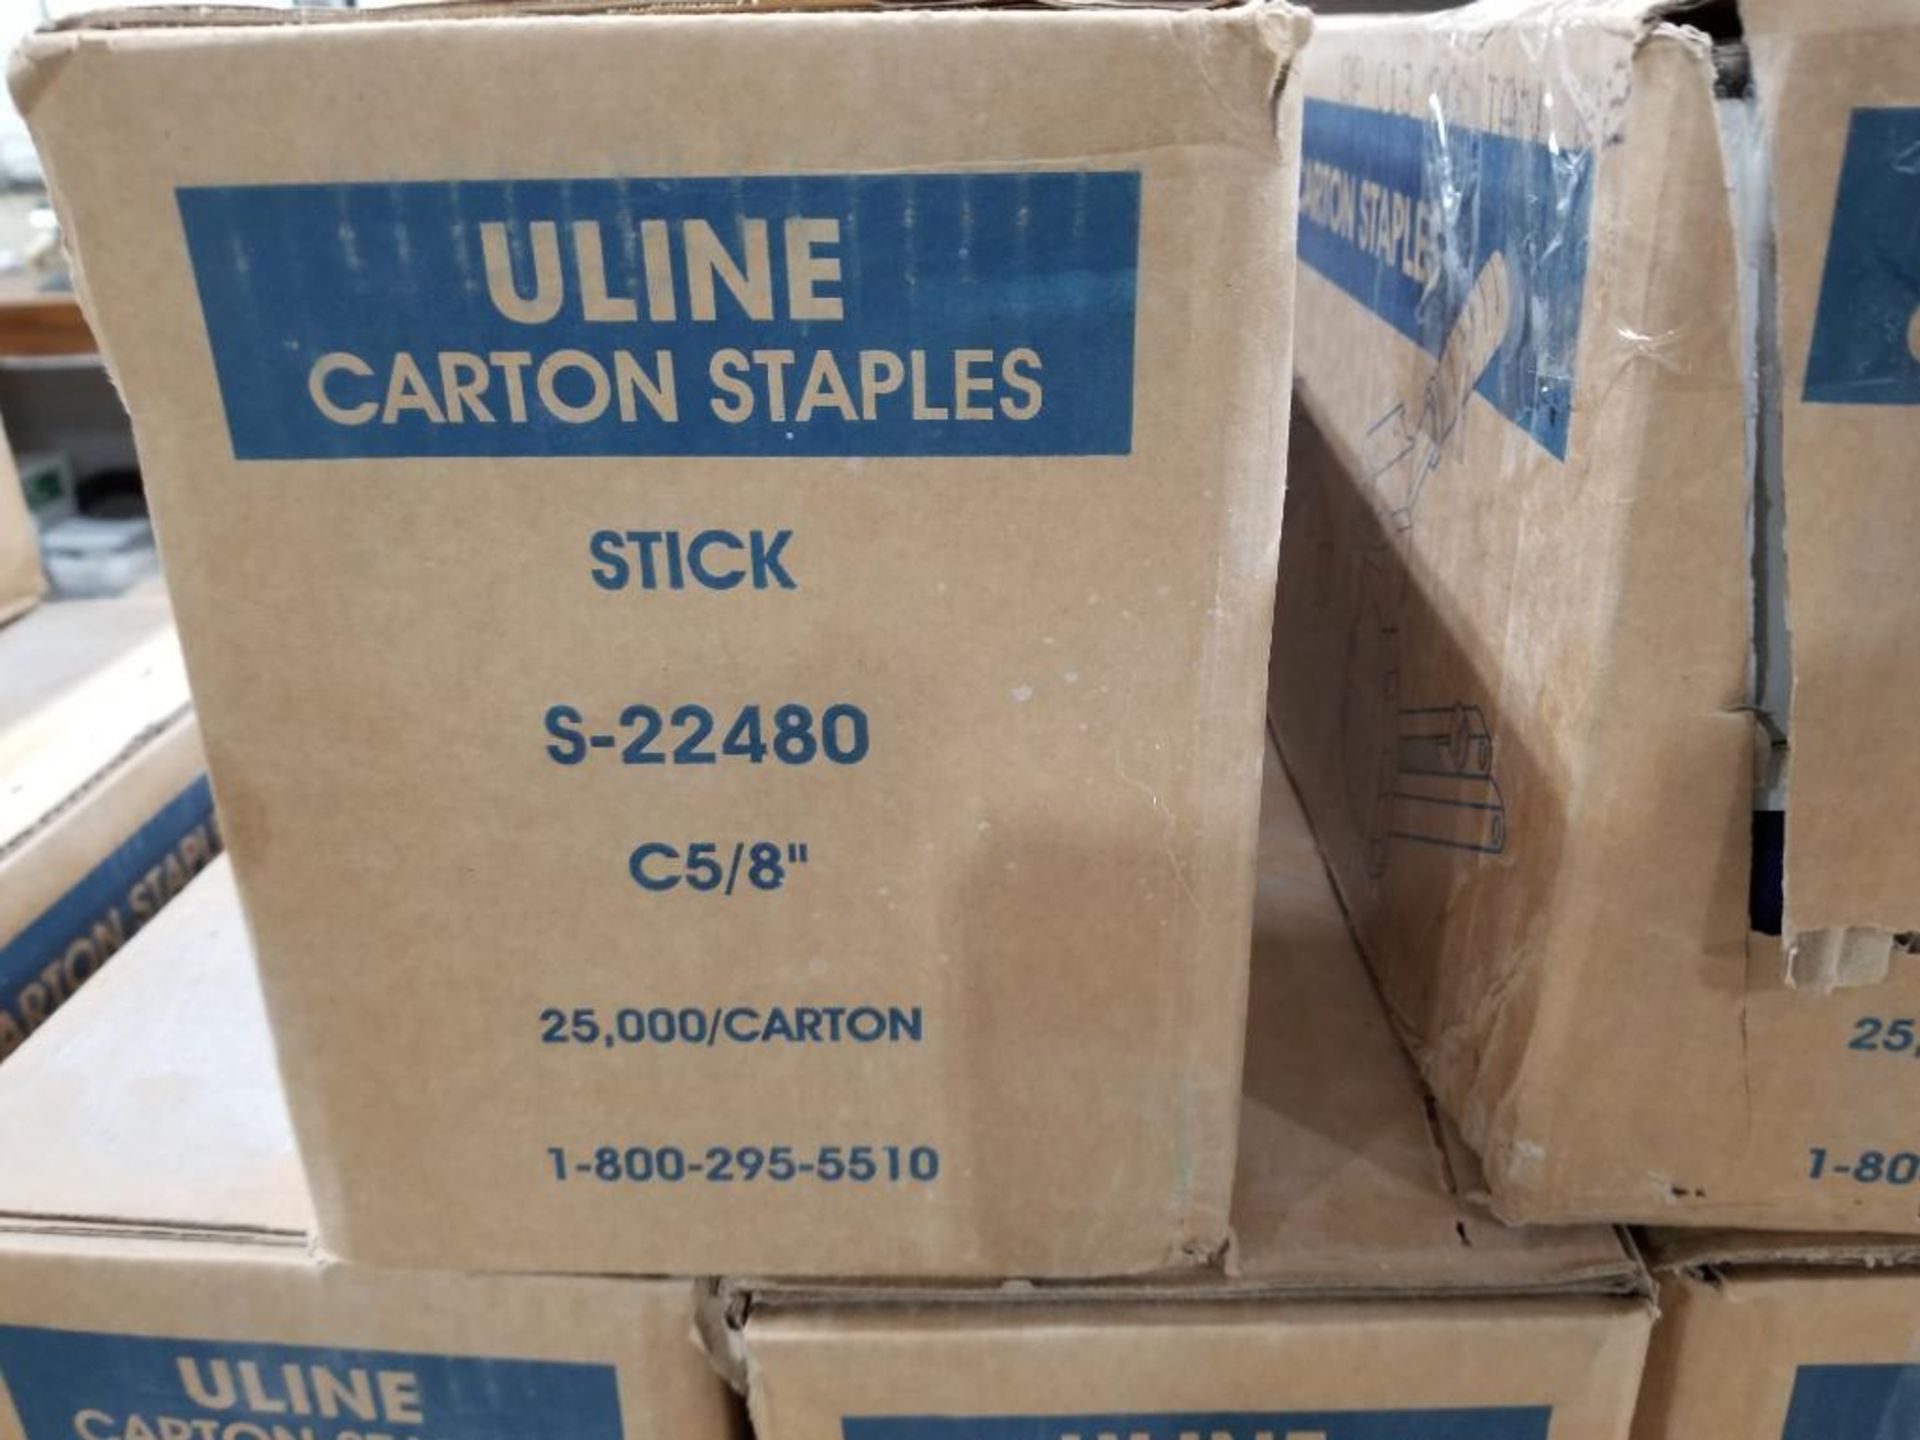 Qty 5 - Cartons of Uline carton staples. Model C22480 C5/8in. 25,000 per carton. - Image 2 of 2